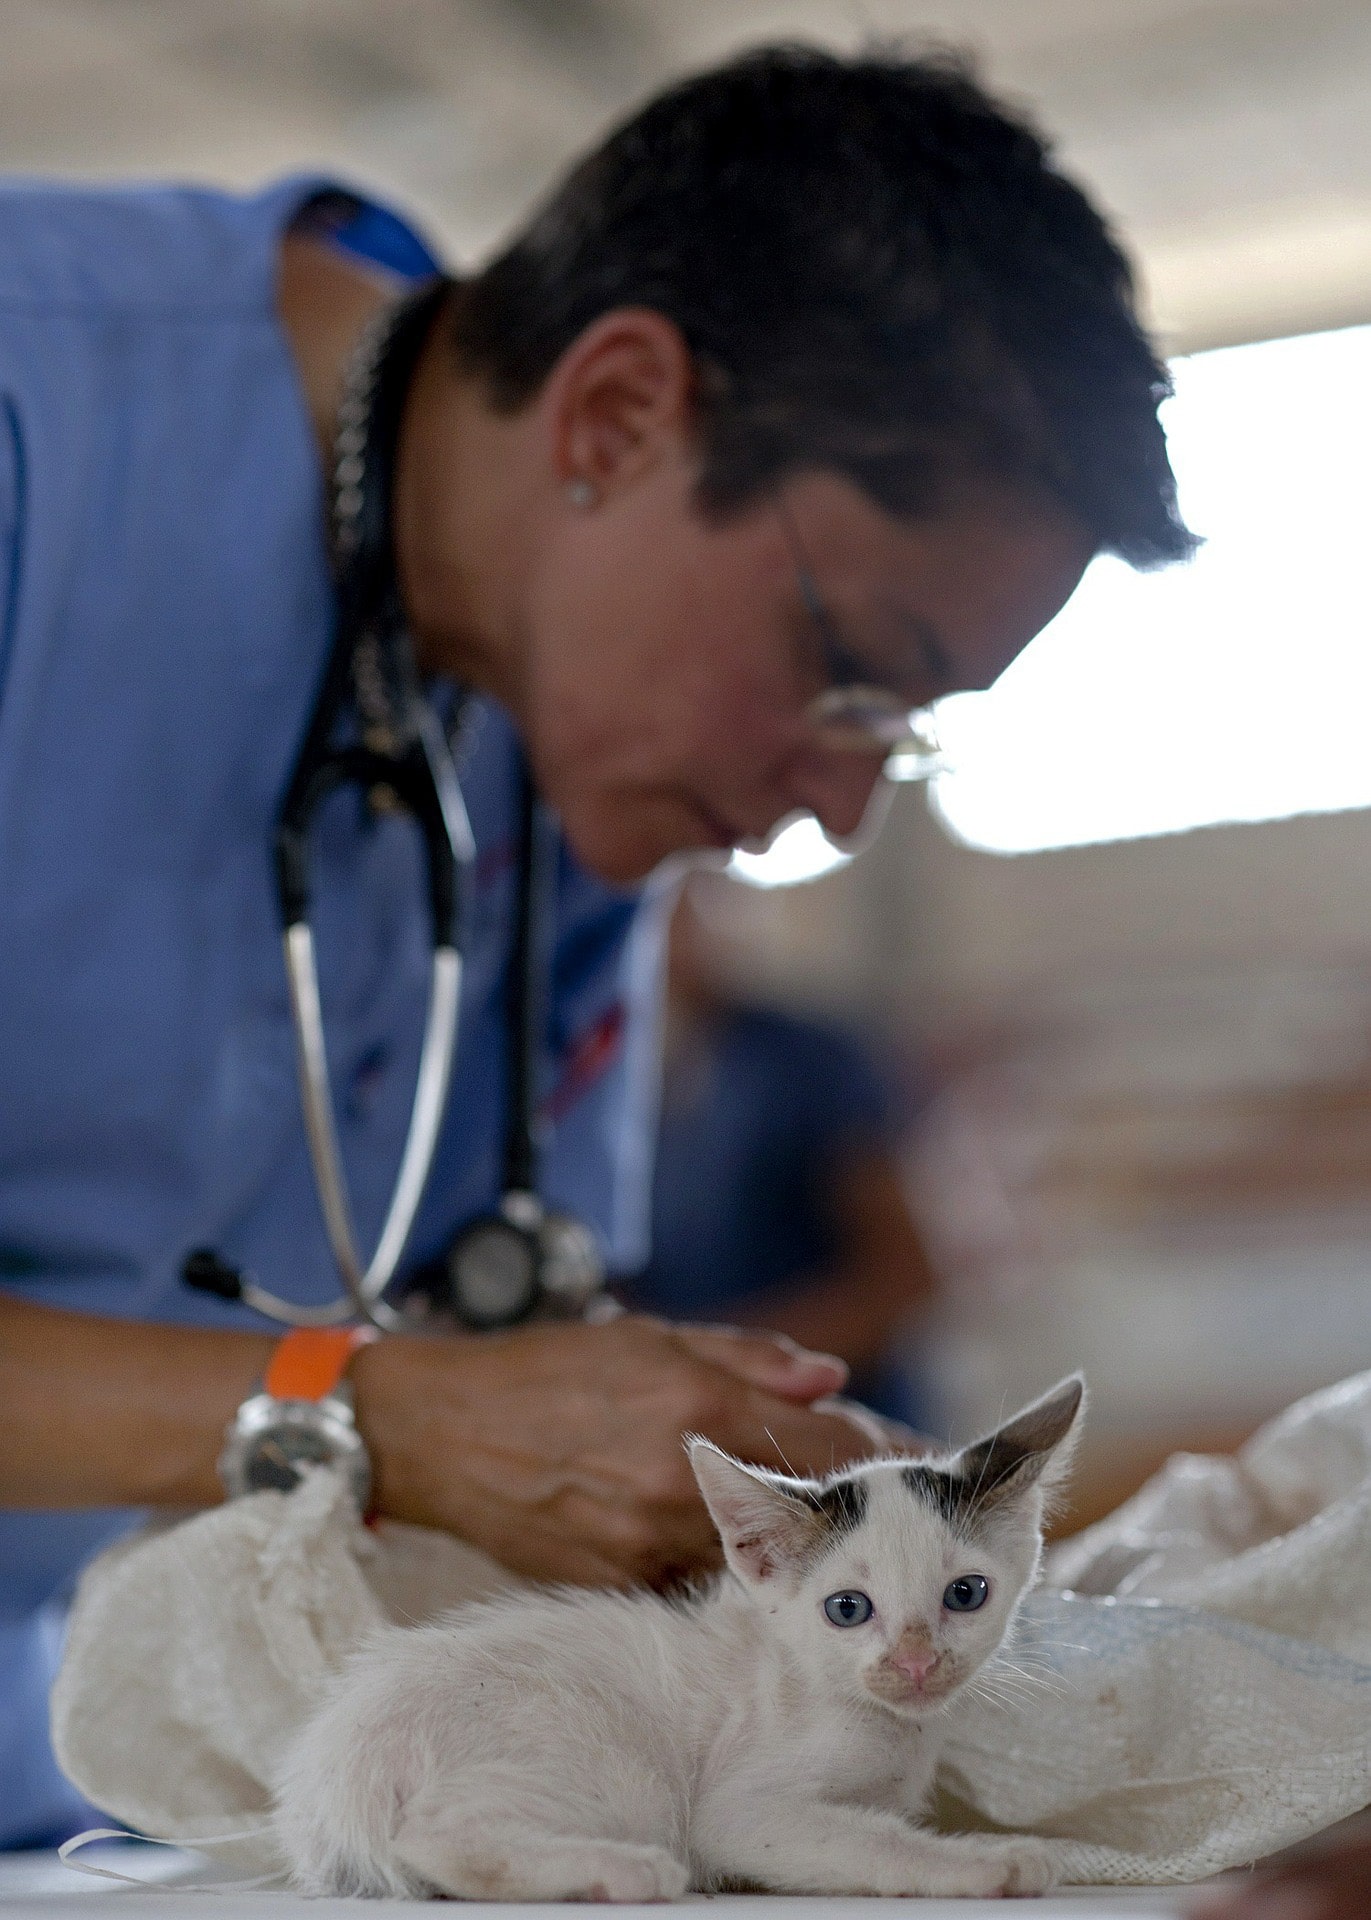 veterinary medicine research articles